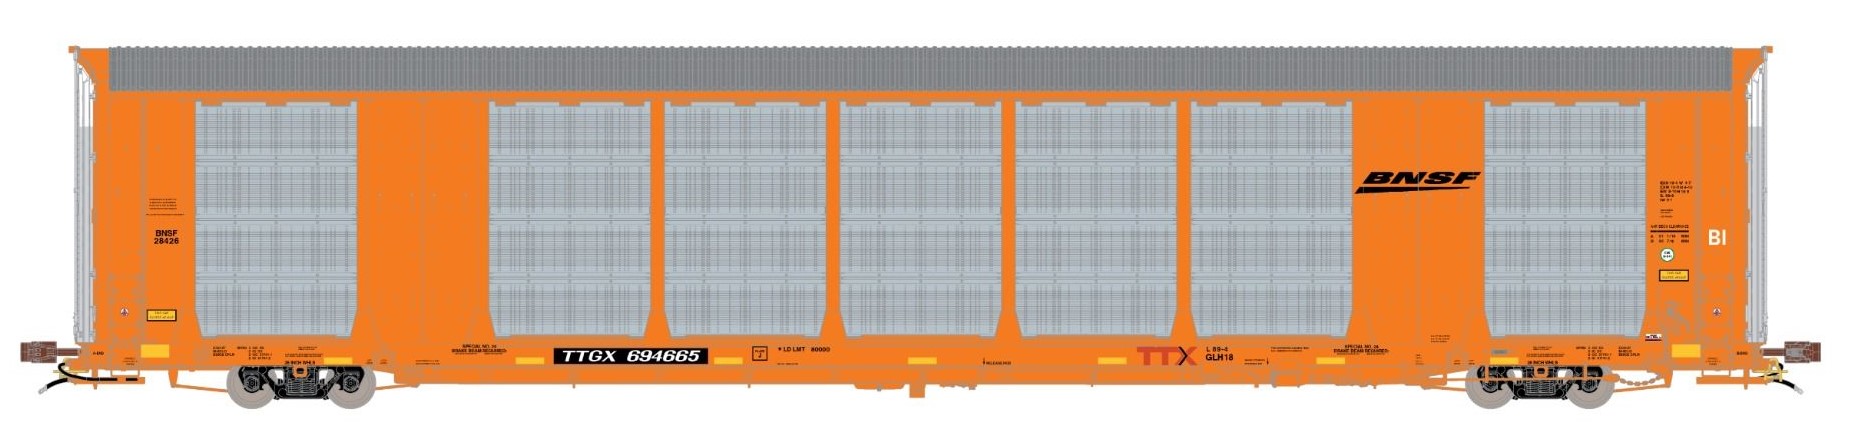 ScaleTrains Rivet Counter HO SXT38863 Gunderson Multi-Max Autorack BNSF Orange Black Logo TTGX #694665